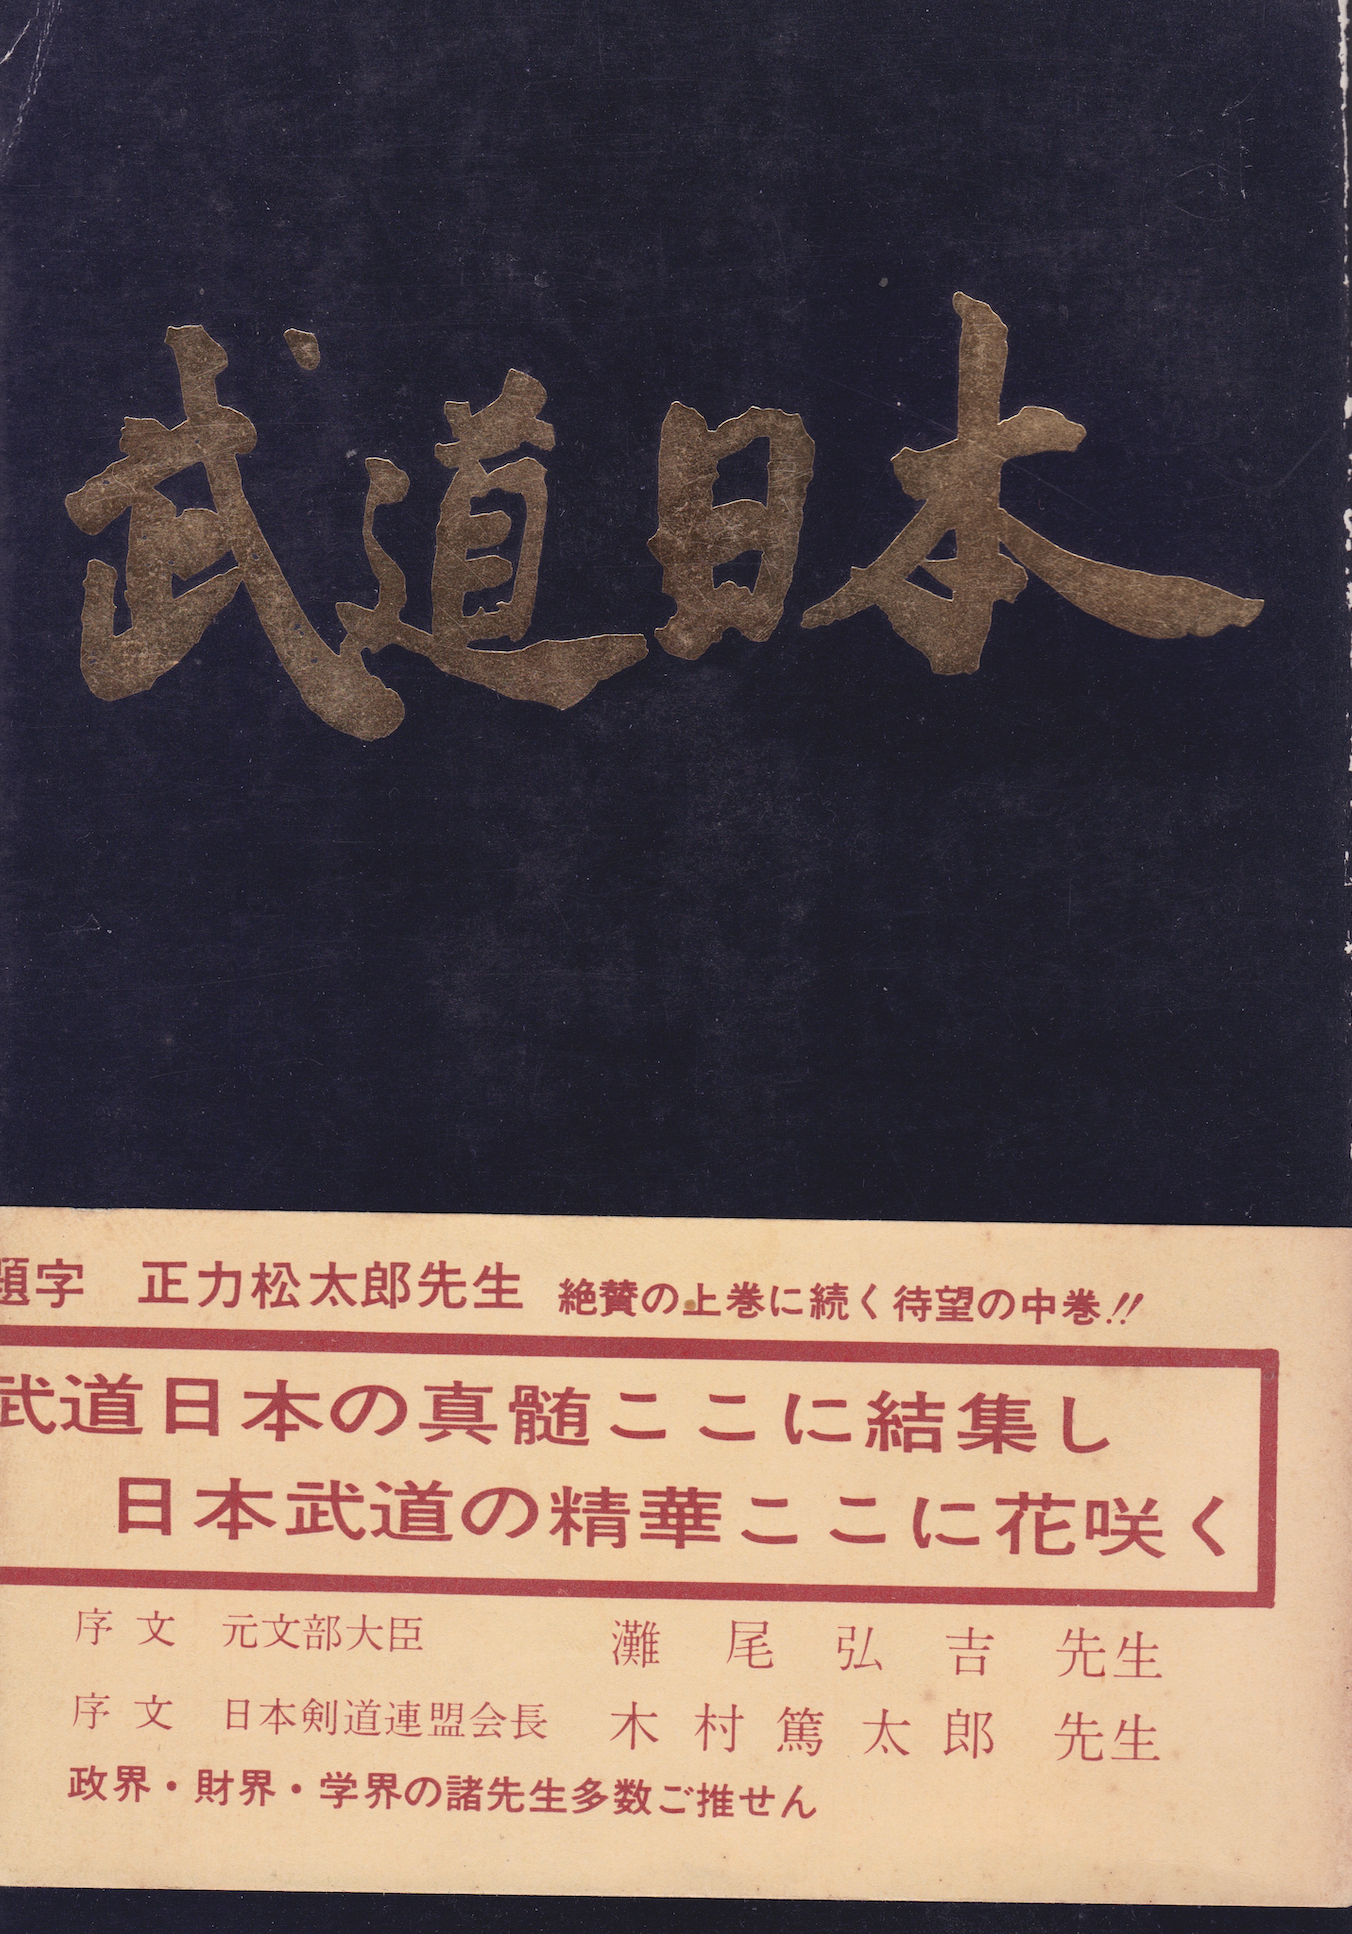 Budo Nippon Book 2 by Tetsuro Morikawa (Preowned)